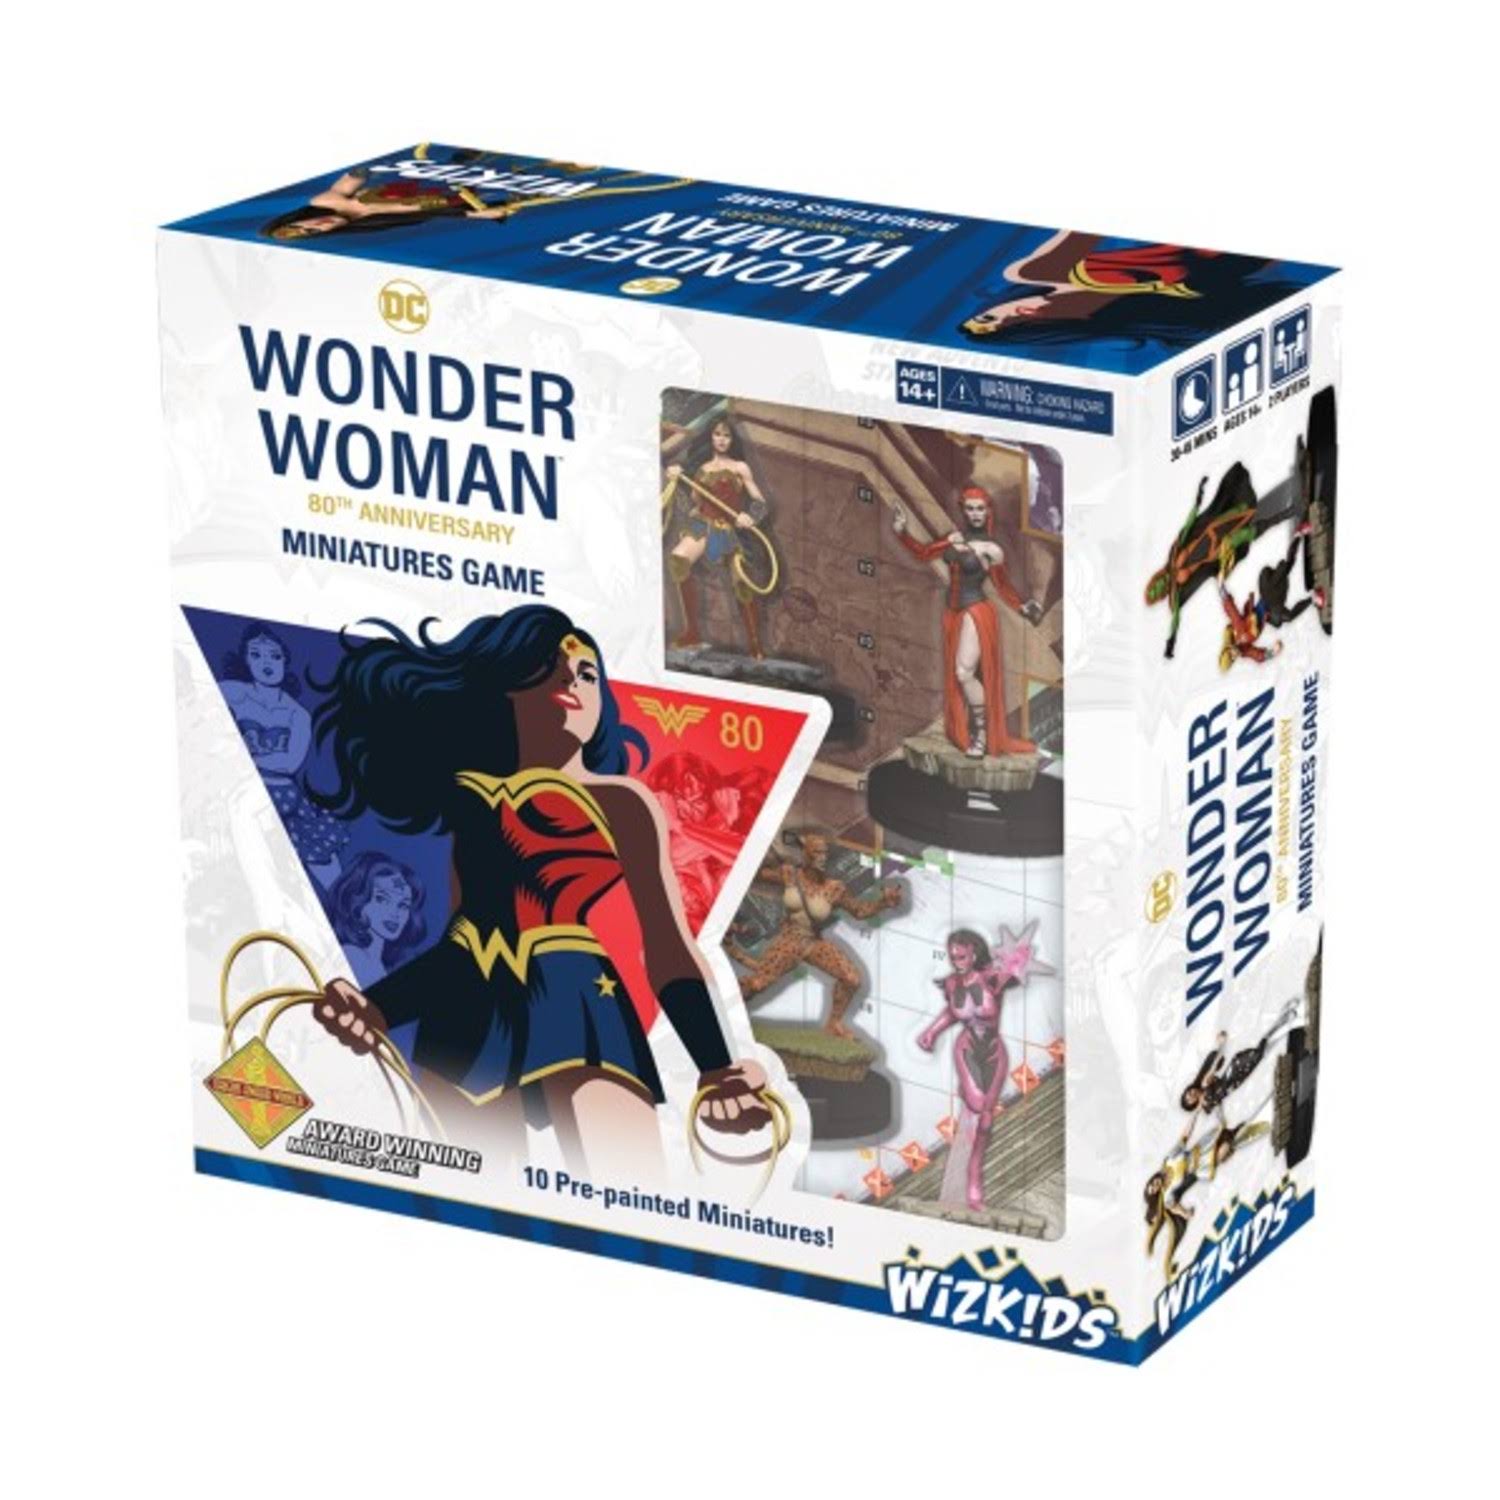 DC COMICS HEROCLIX - WONDER WOMAN 80TH ANNIVERSARY MINIATURES GAME